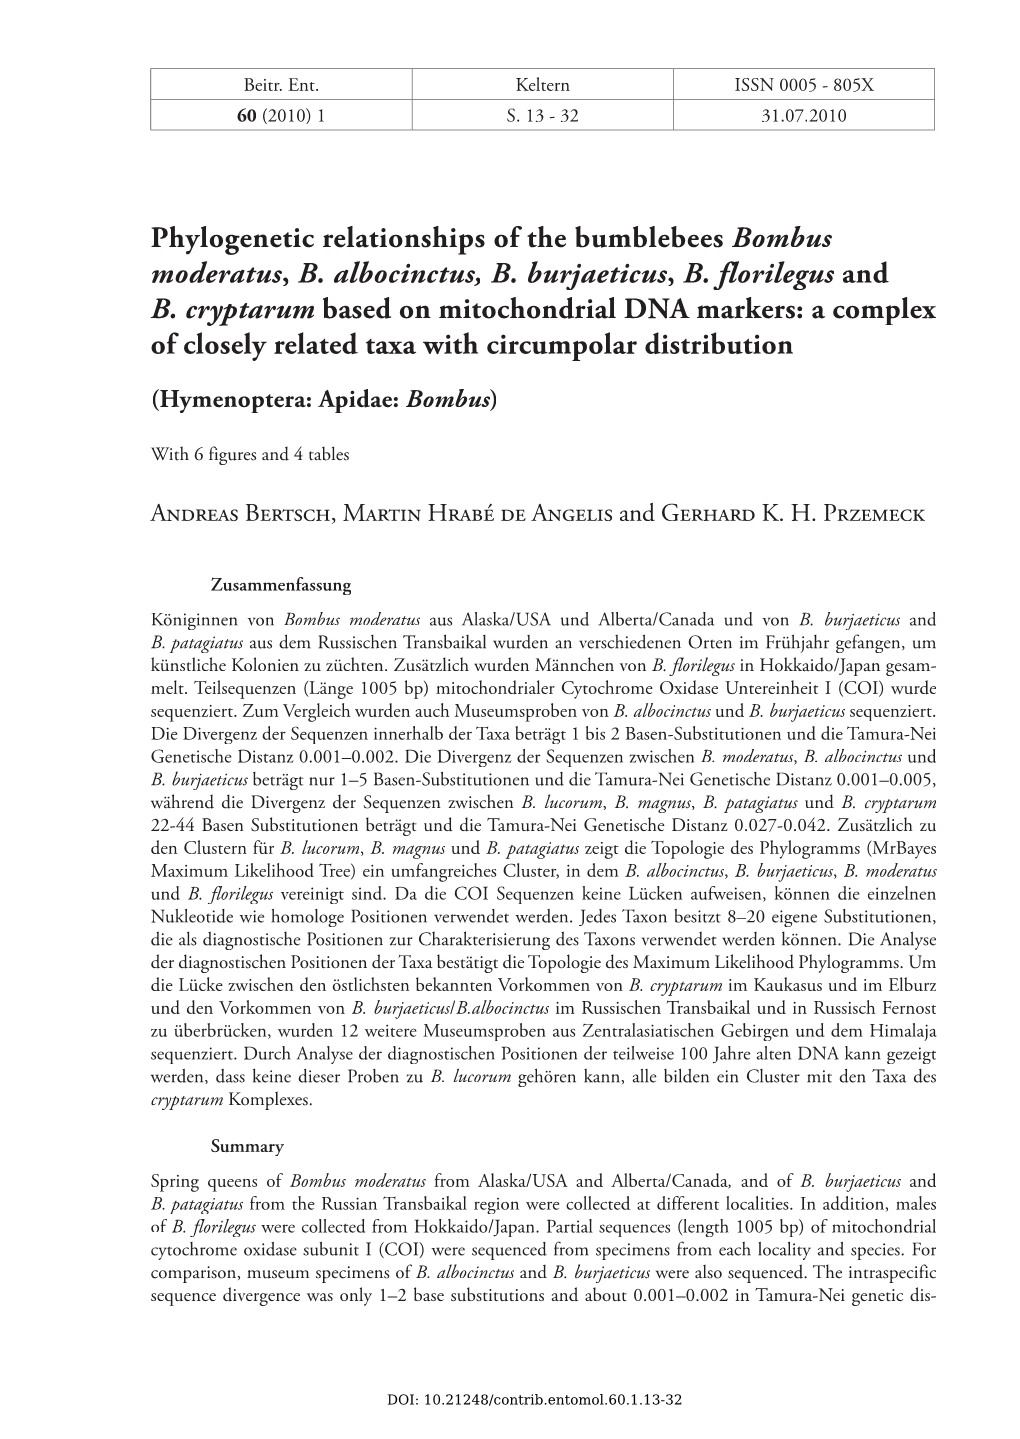 Phylogenetic Relationships of the Bumblebees Bombus Moderatus, B